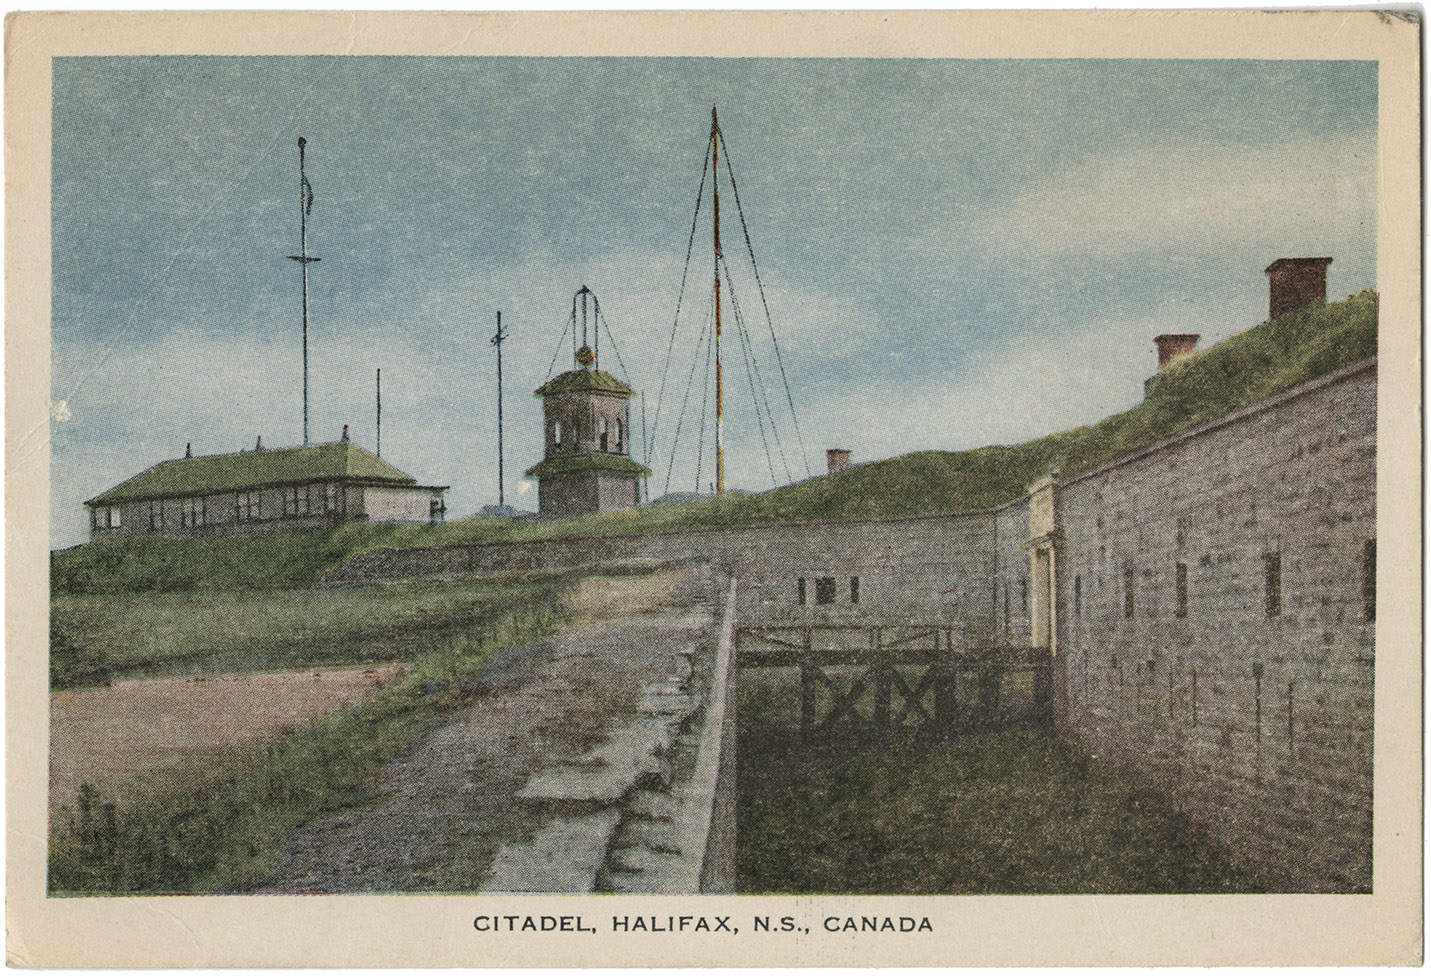 communityalbums - Citadel, Halifax, N.S., Canada